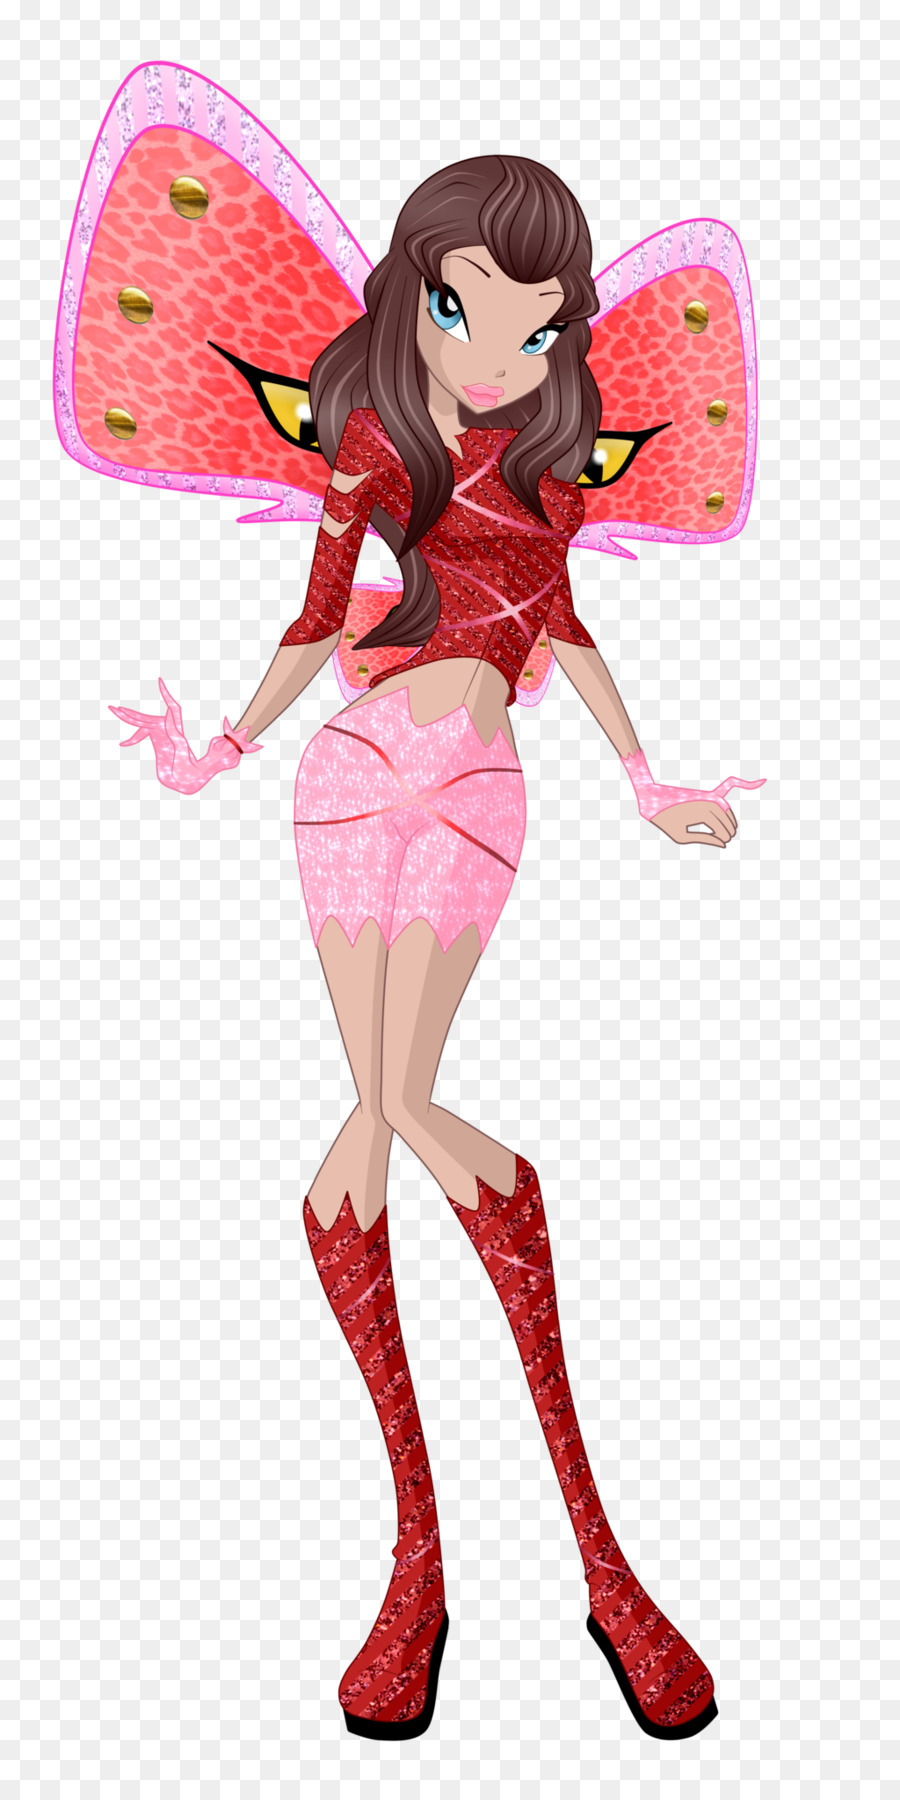 Barbie Fee - Barbie